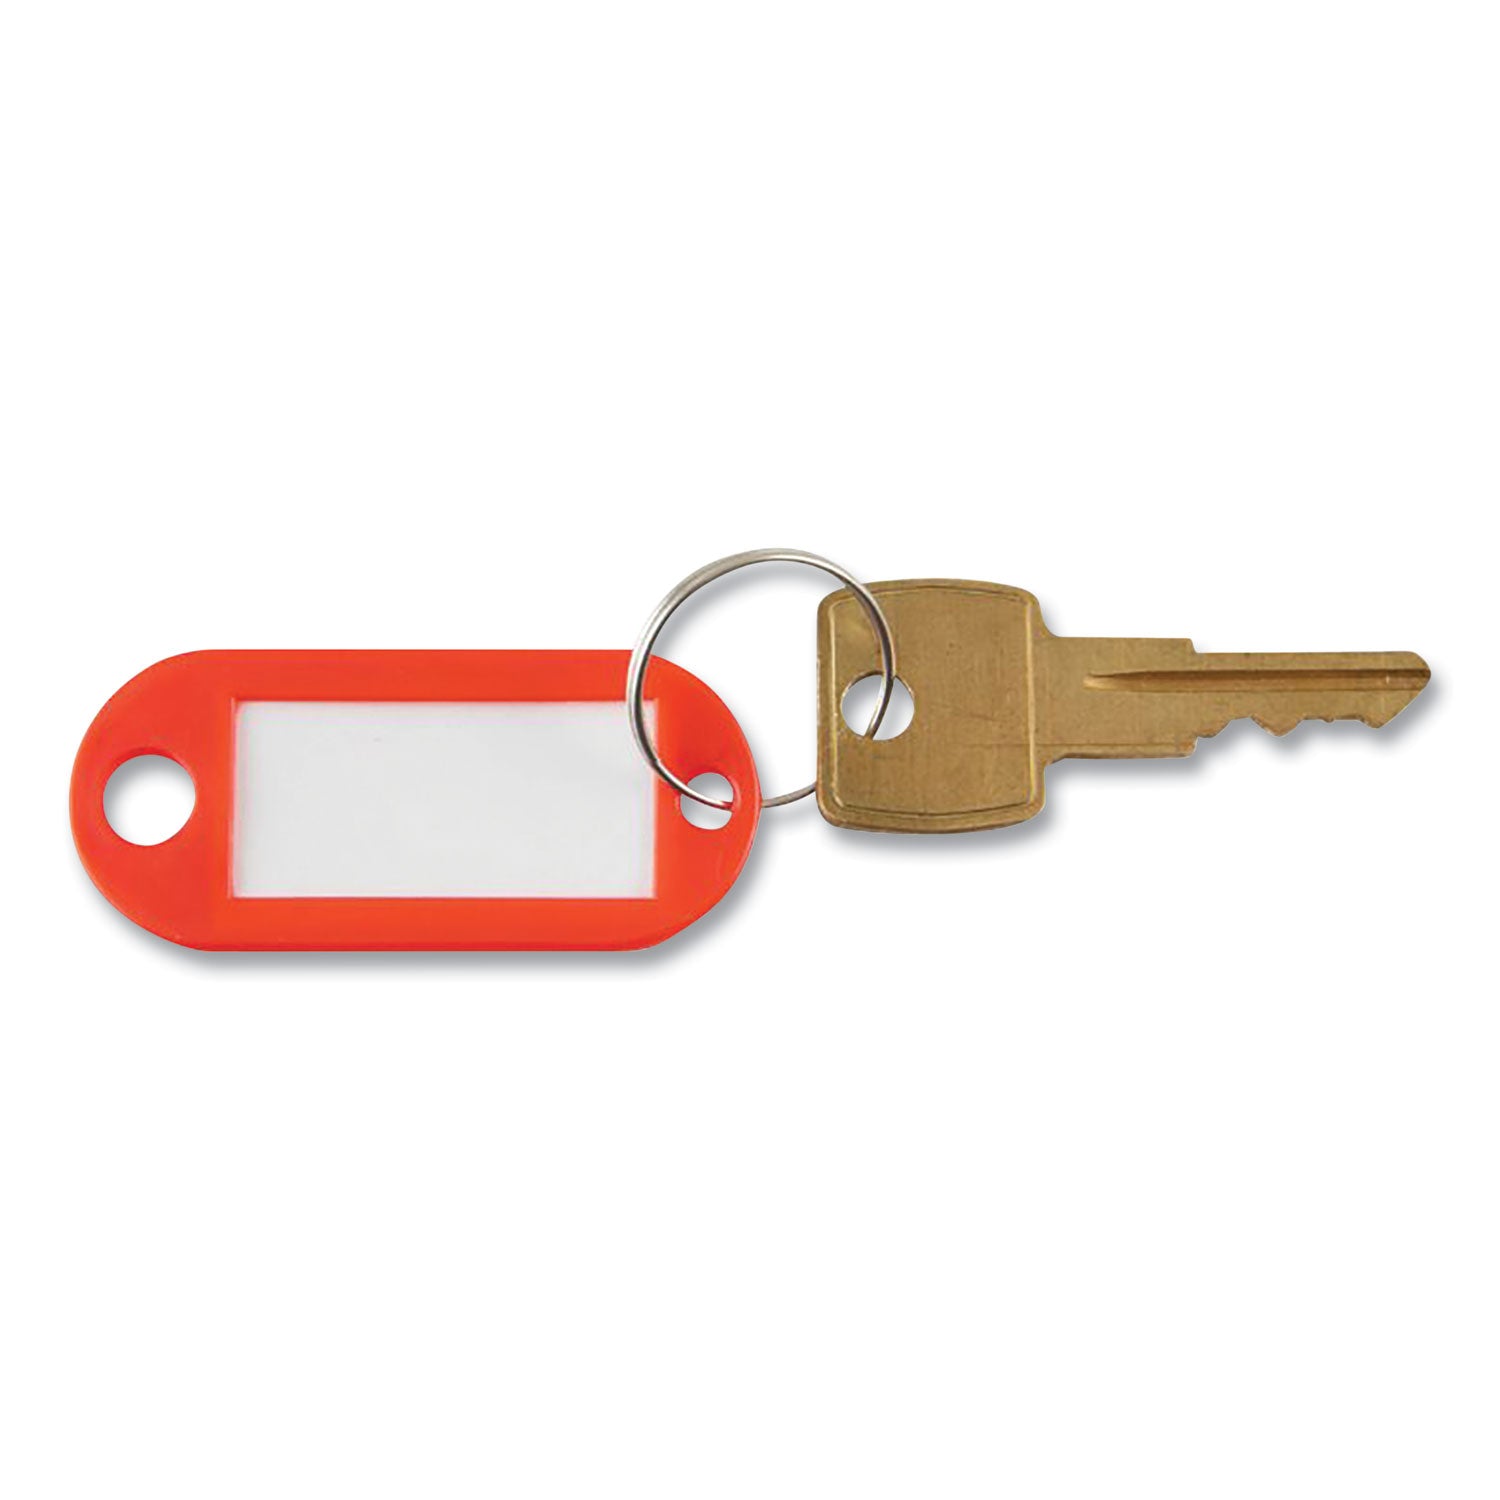 key-tags-label-window-088-x-019-x-2-red-6-pack_avtkey98018 - 2